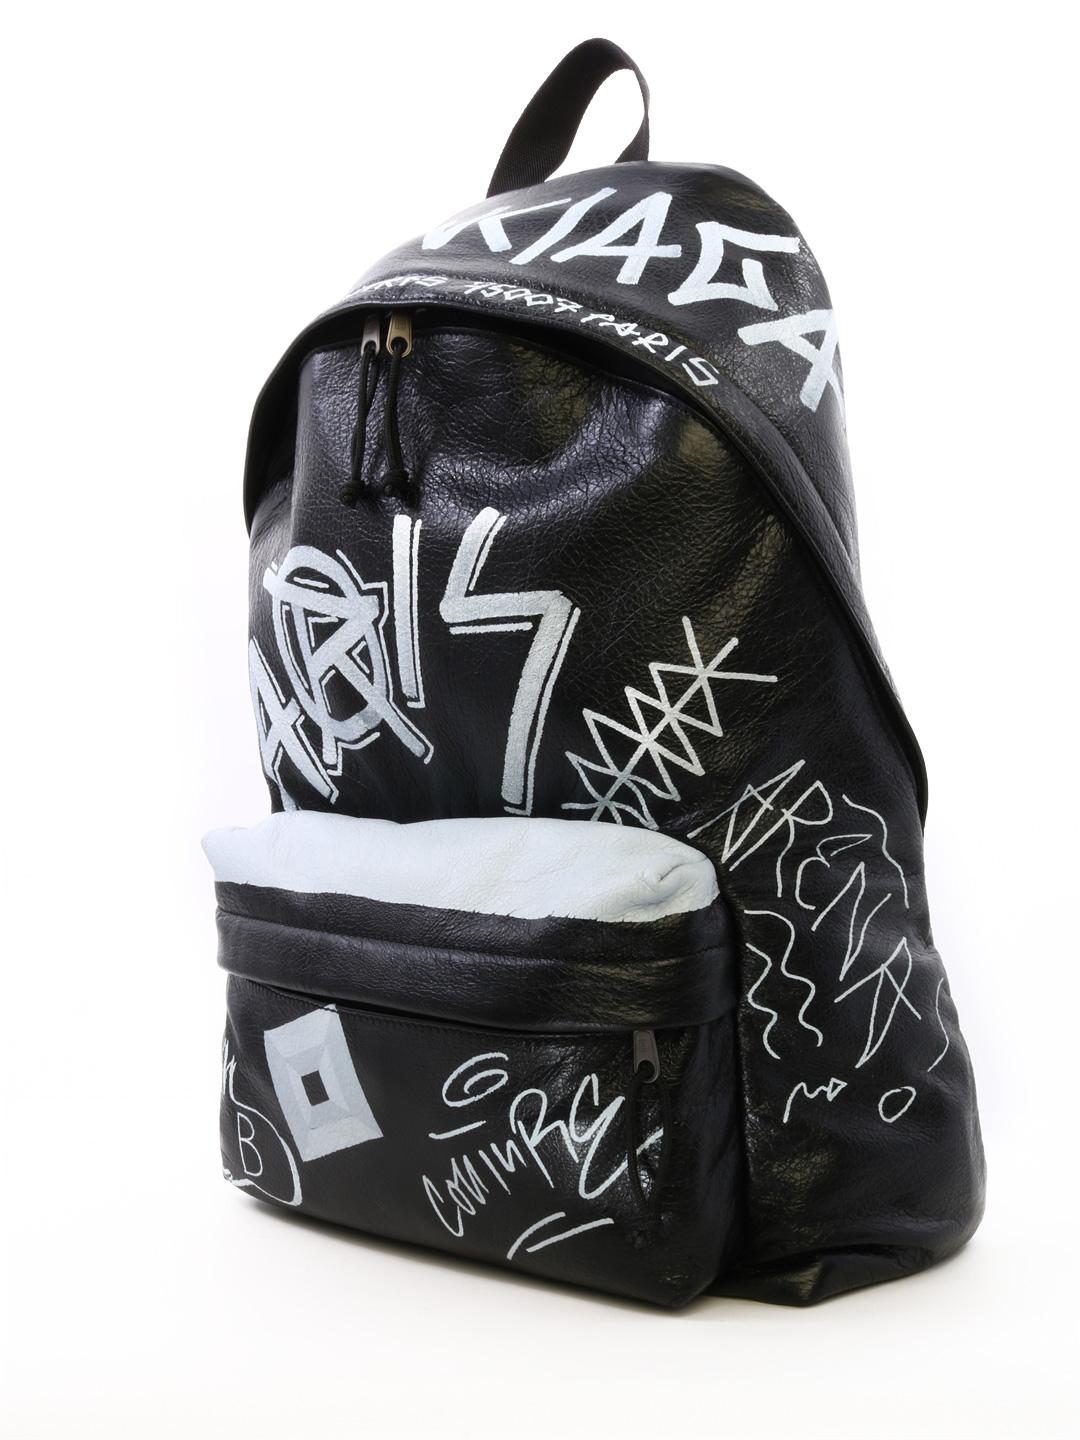 Balenciaga Explorer Graffiti Backpack in Black for Men - Lyst